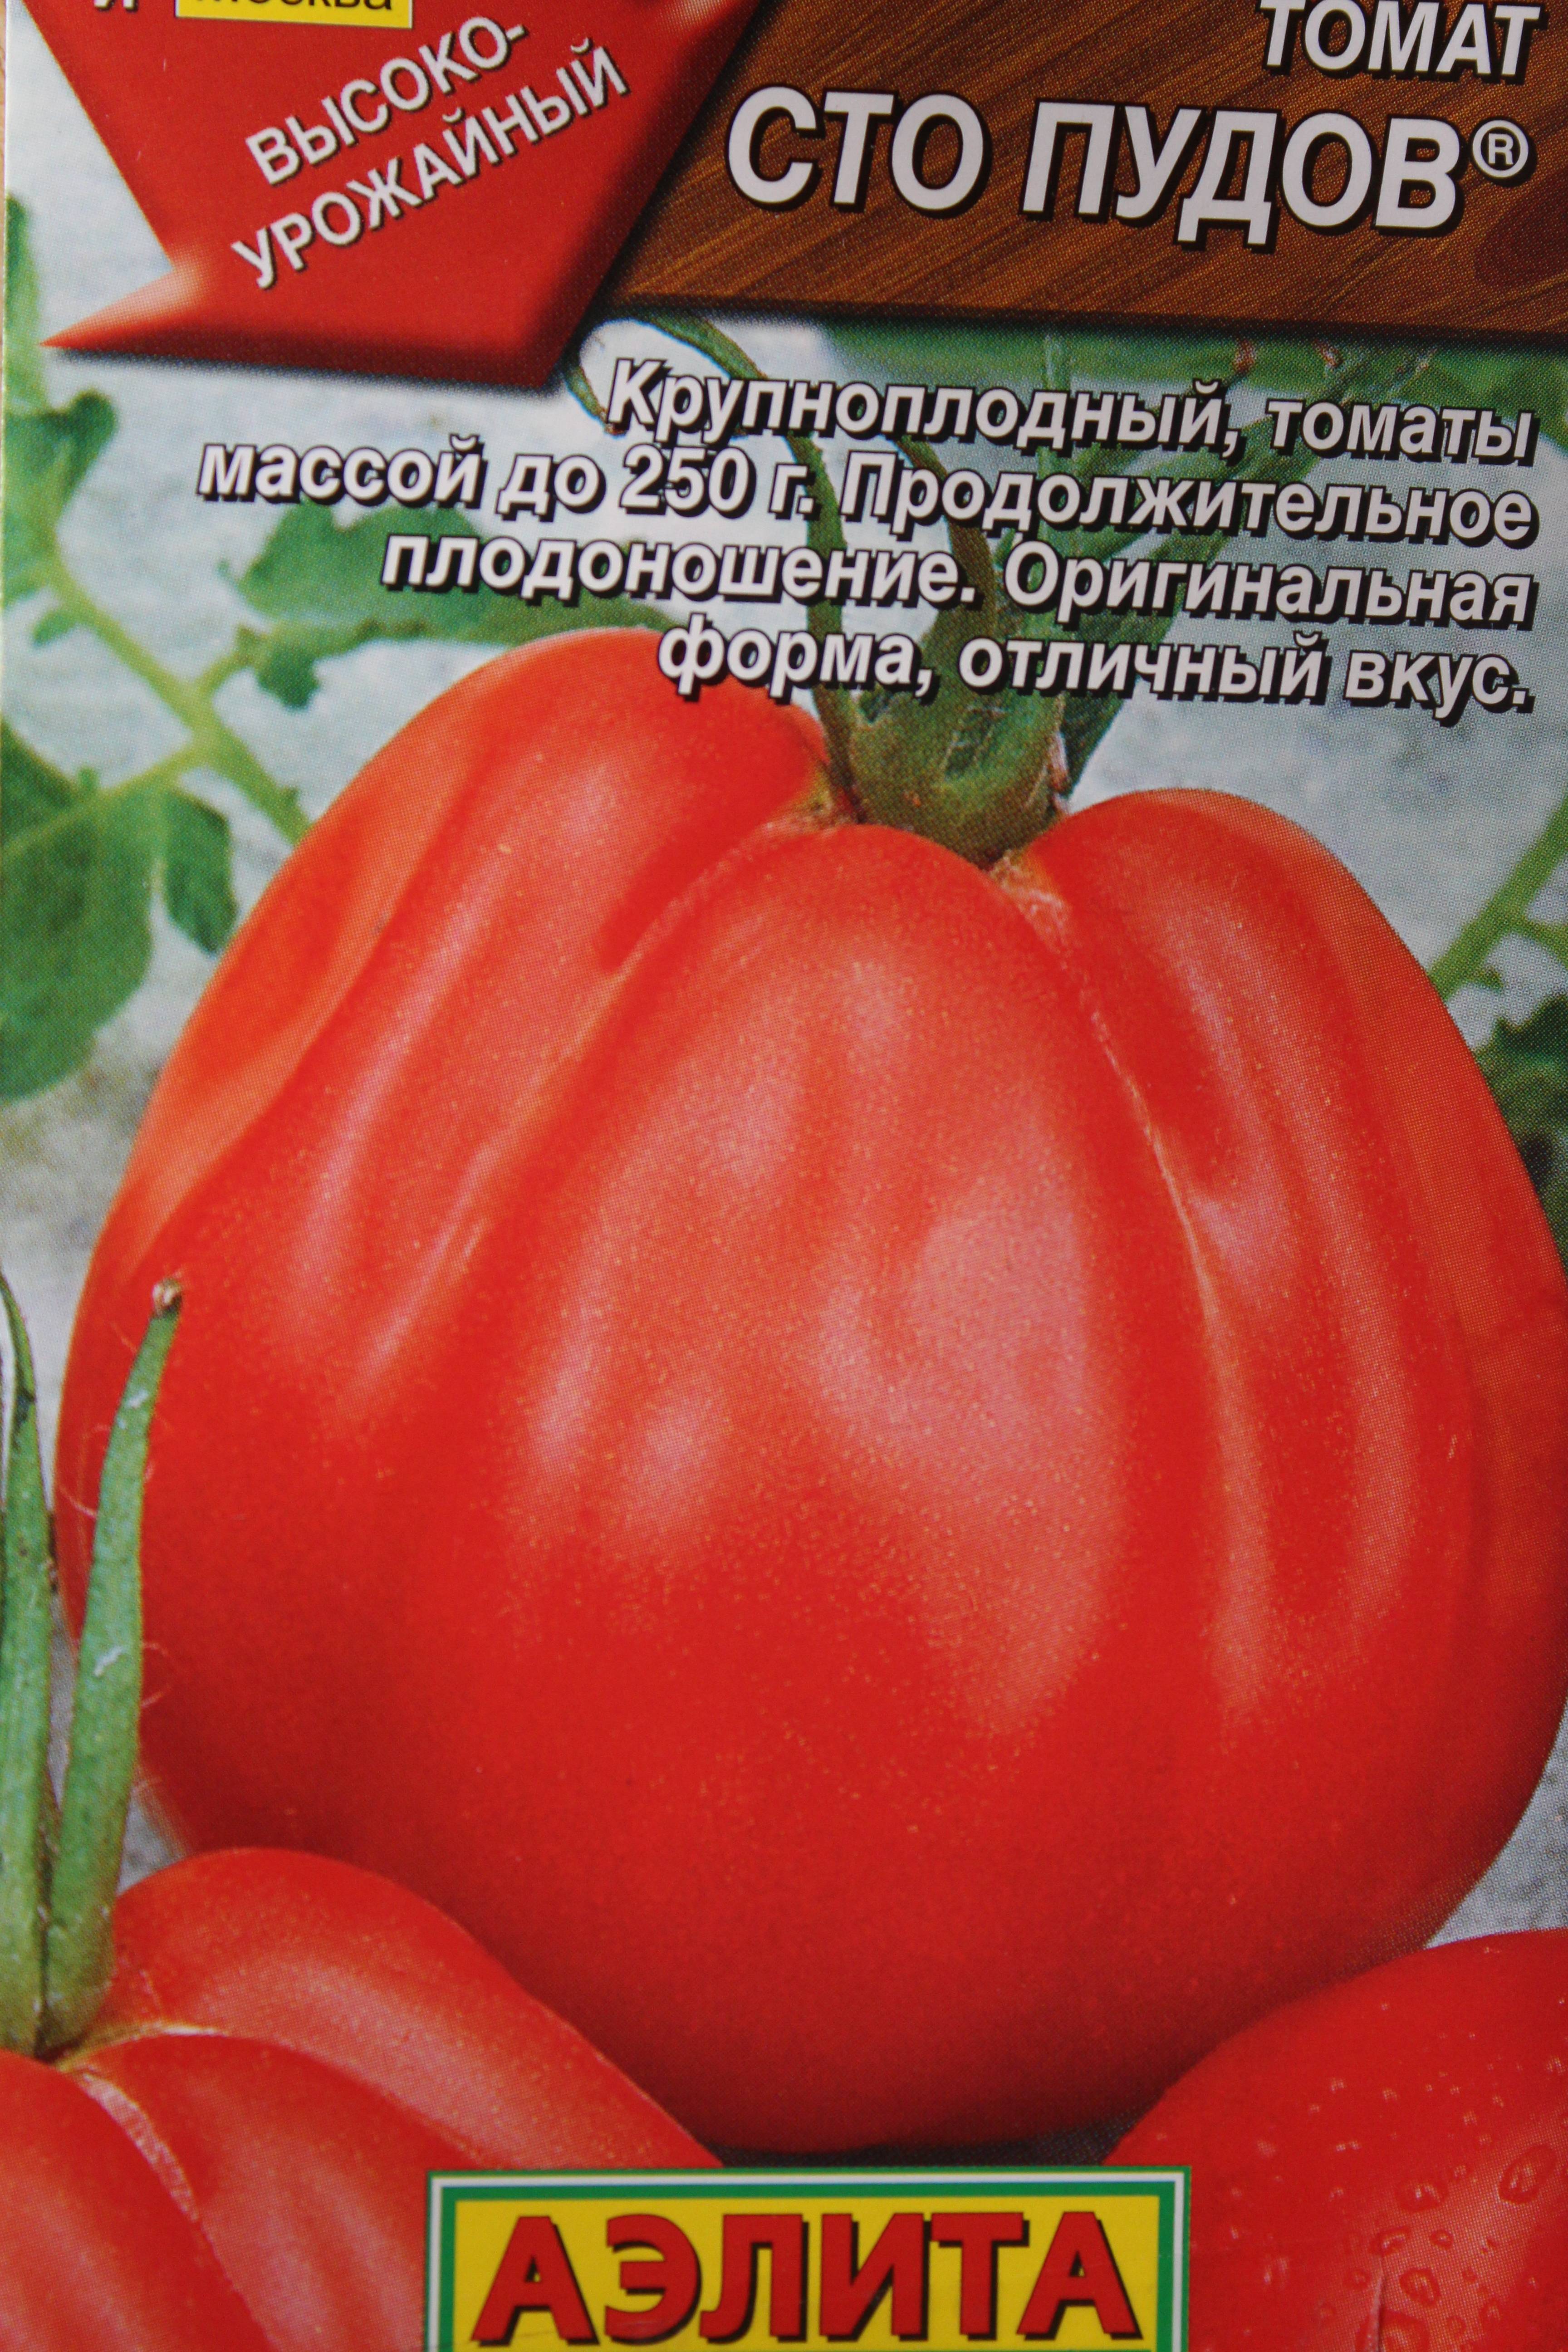 Сорт томатов самара — характеристика и особенности выращивания